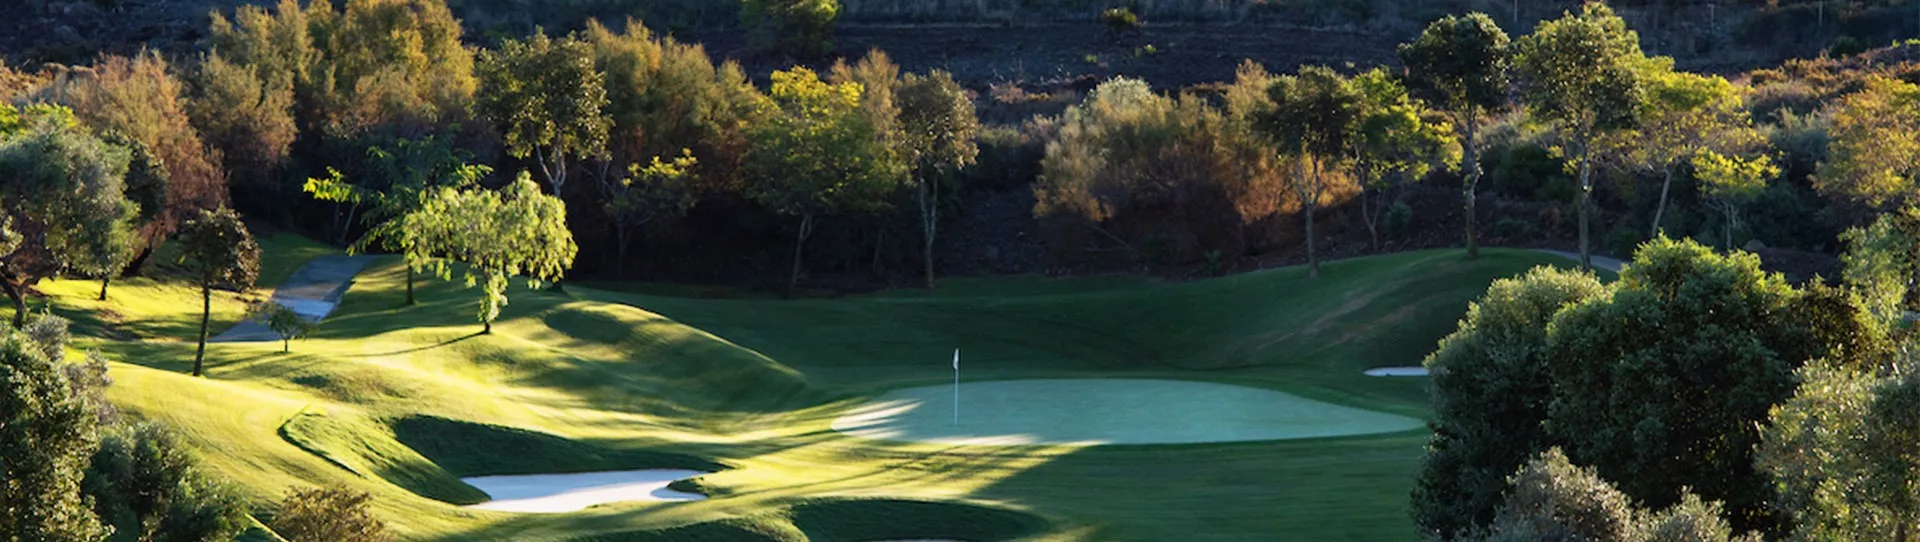 Spain golf courses - Marbella Club Golf Resort - Photo 1